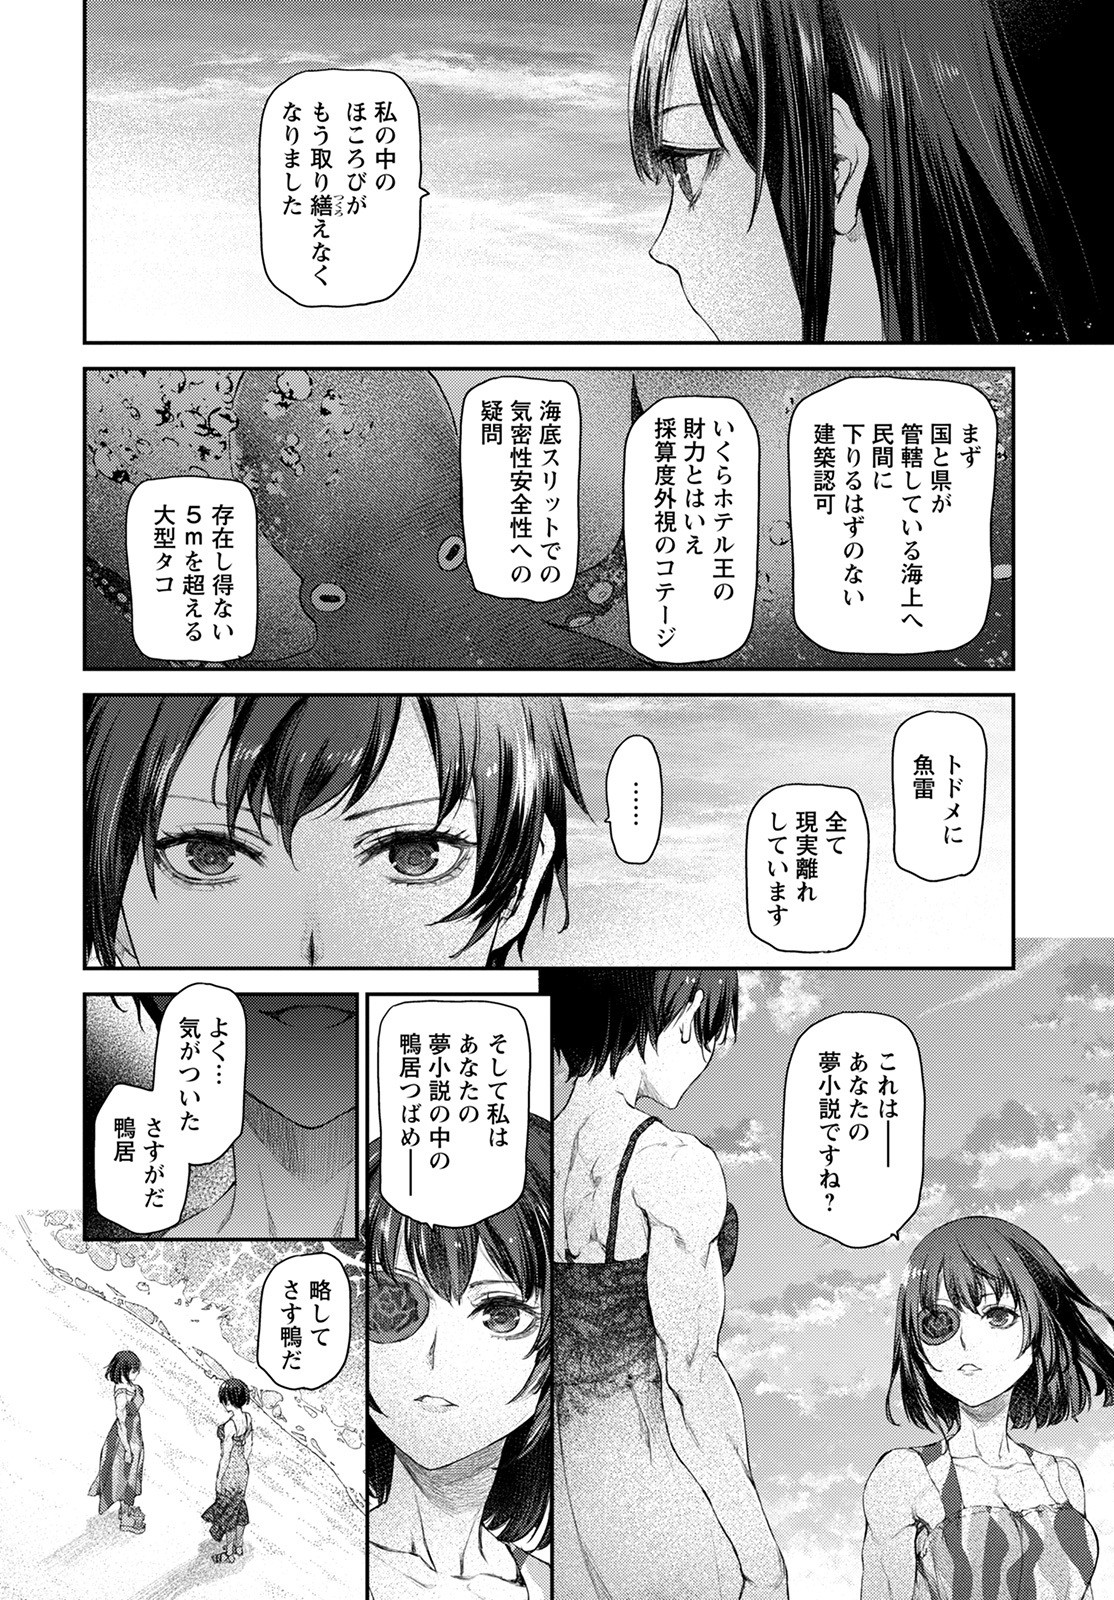 Uchi no Maid ga Uzasugiru! - Chapter 51 - Page 24